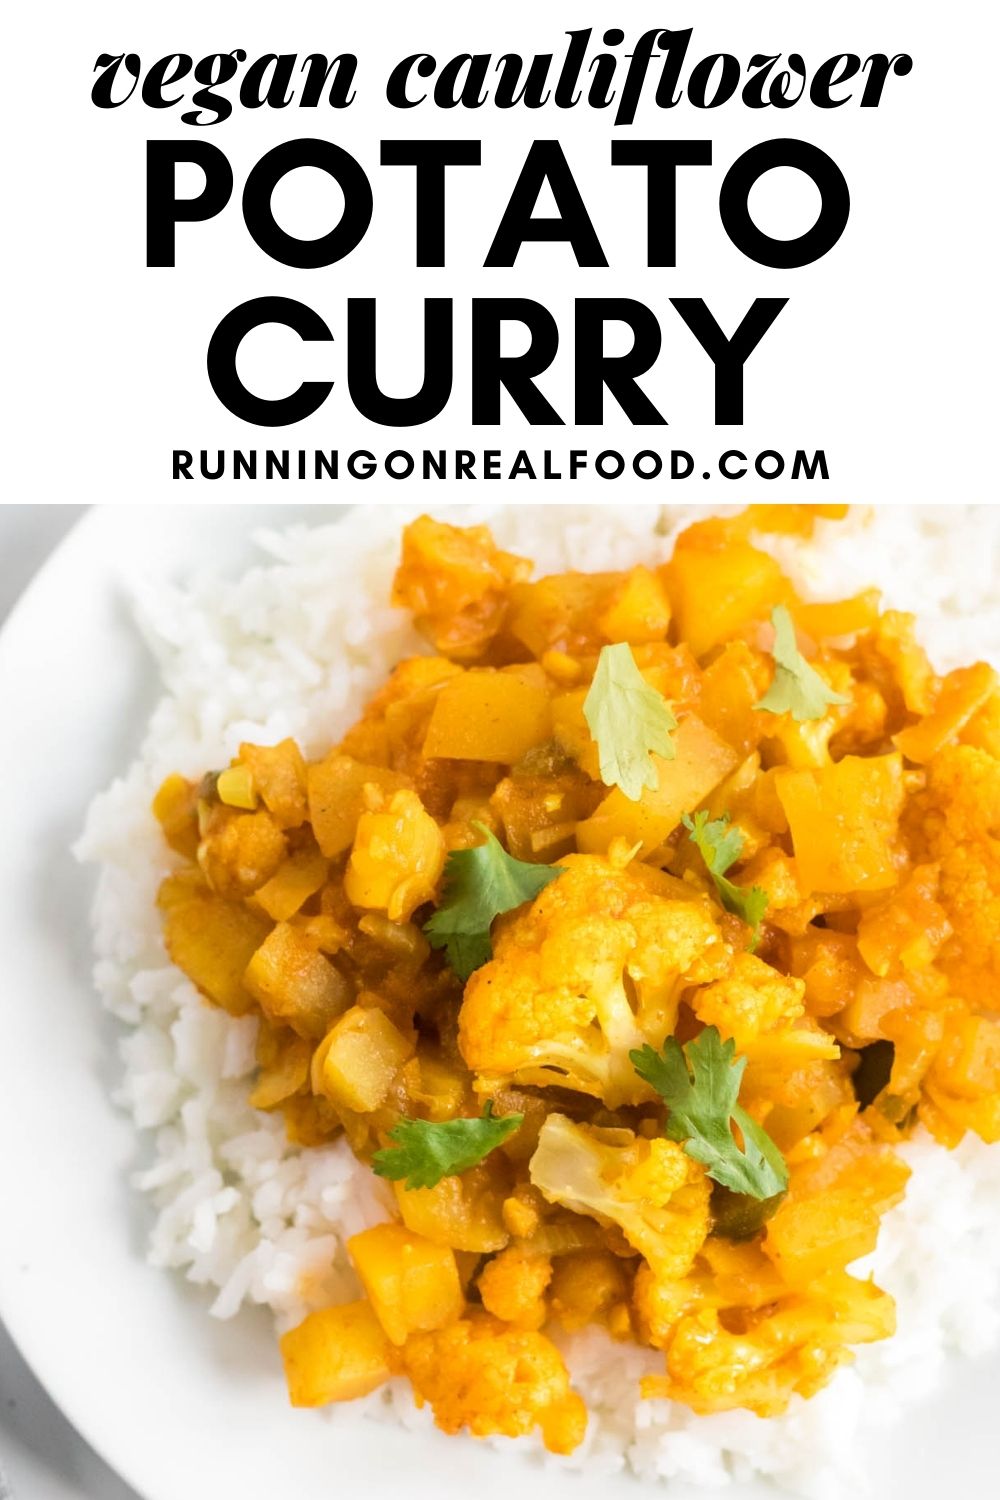 Cauliflower and Potato Curry Recipe (Aloo Gobi) - Running on Real Food